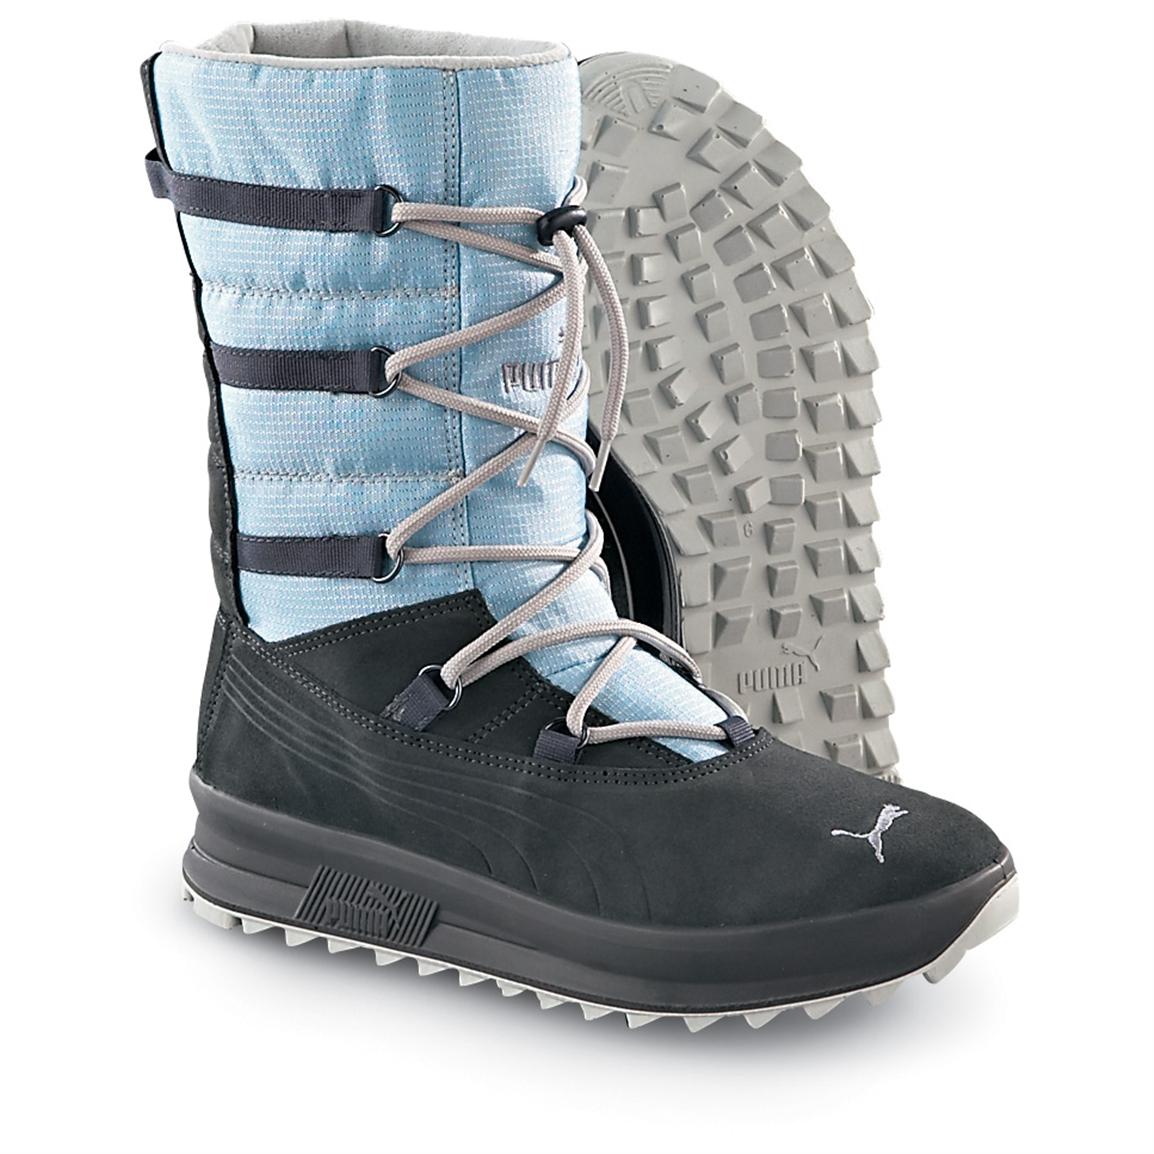 snow boots puma